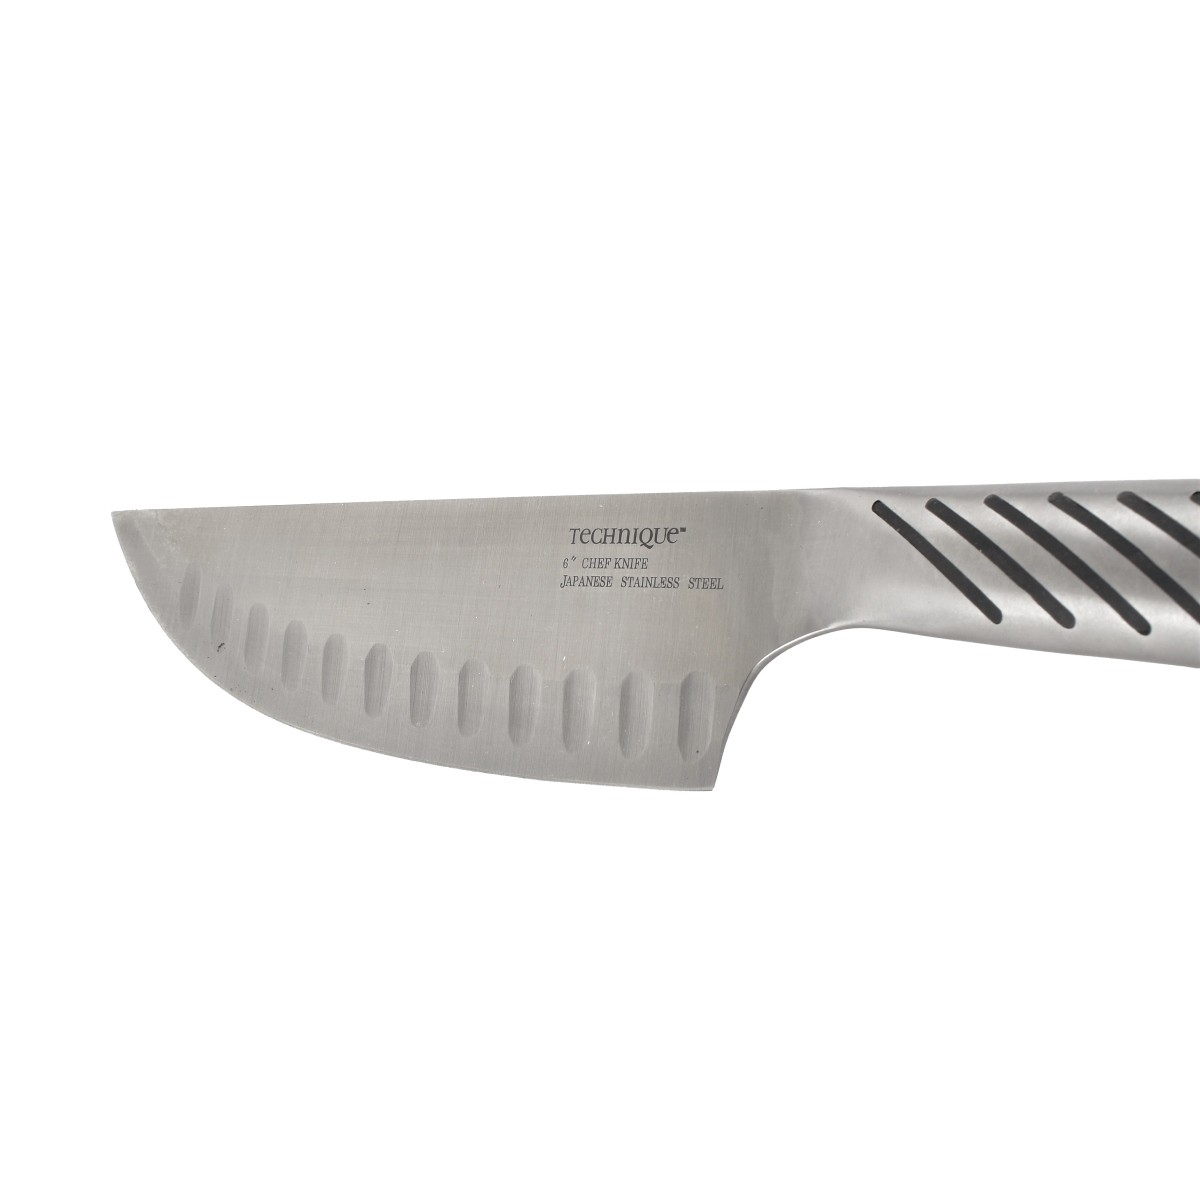 Technique 6" Chef Knife